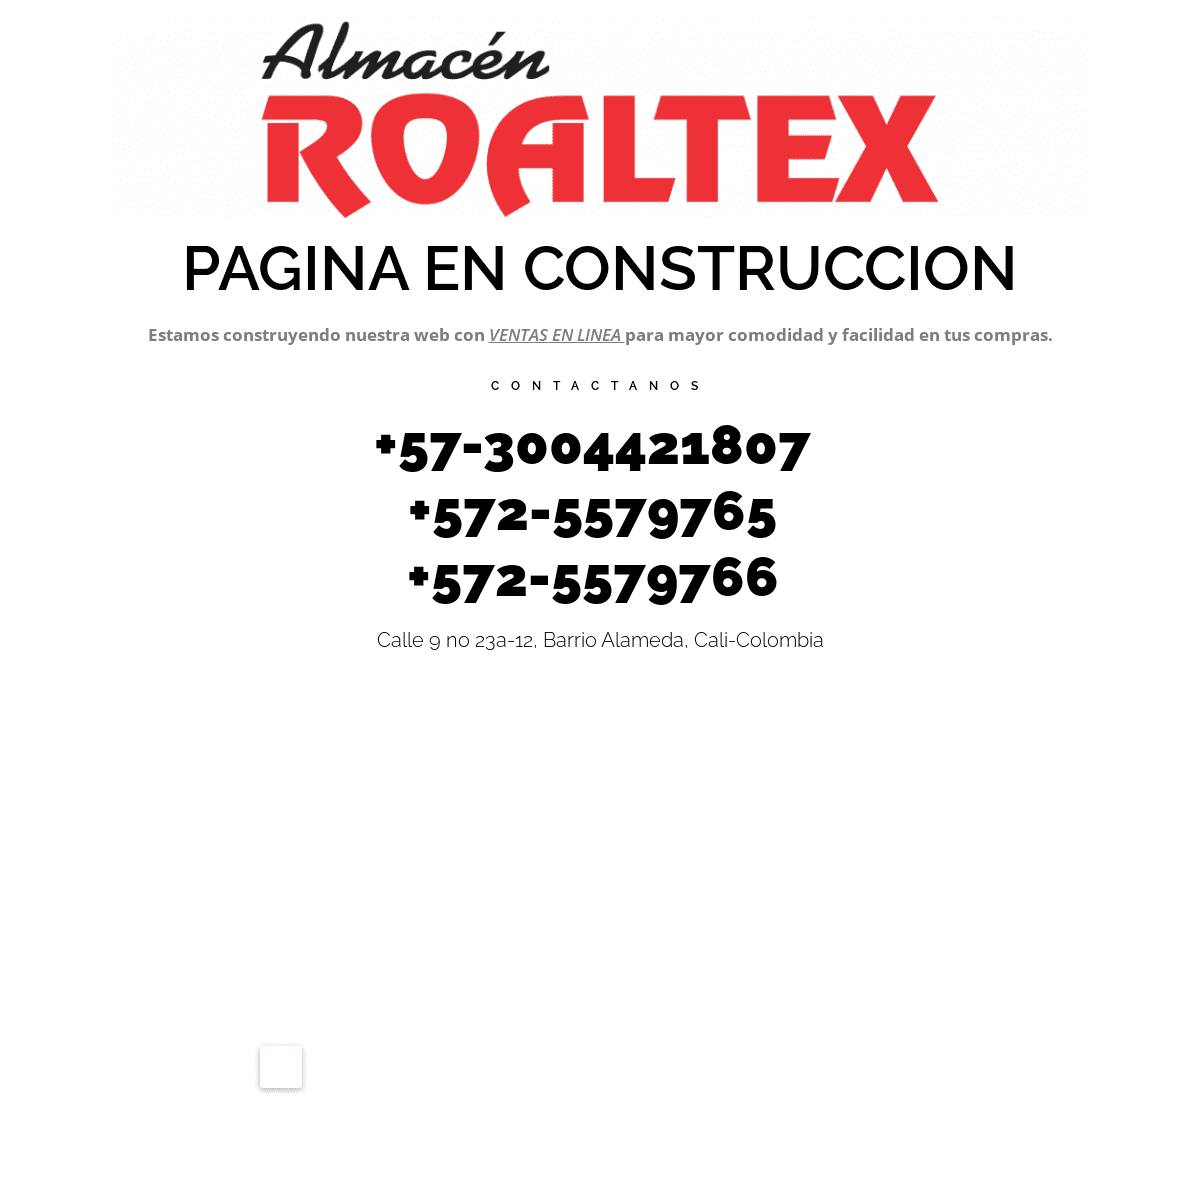 A complete backup of https://roaltex.com